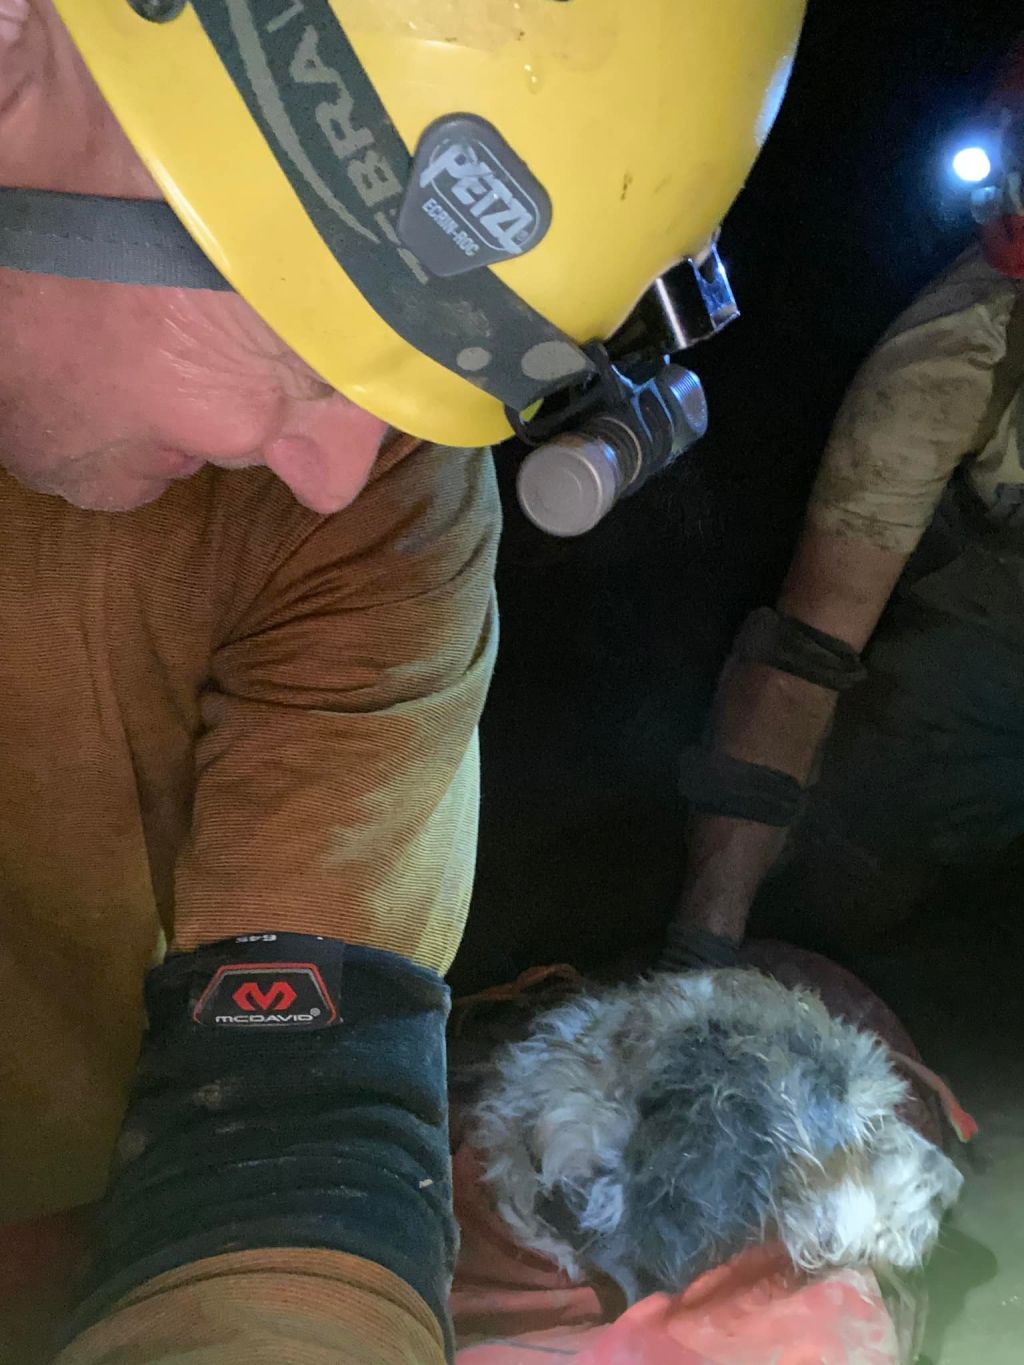 Dog rescued